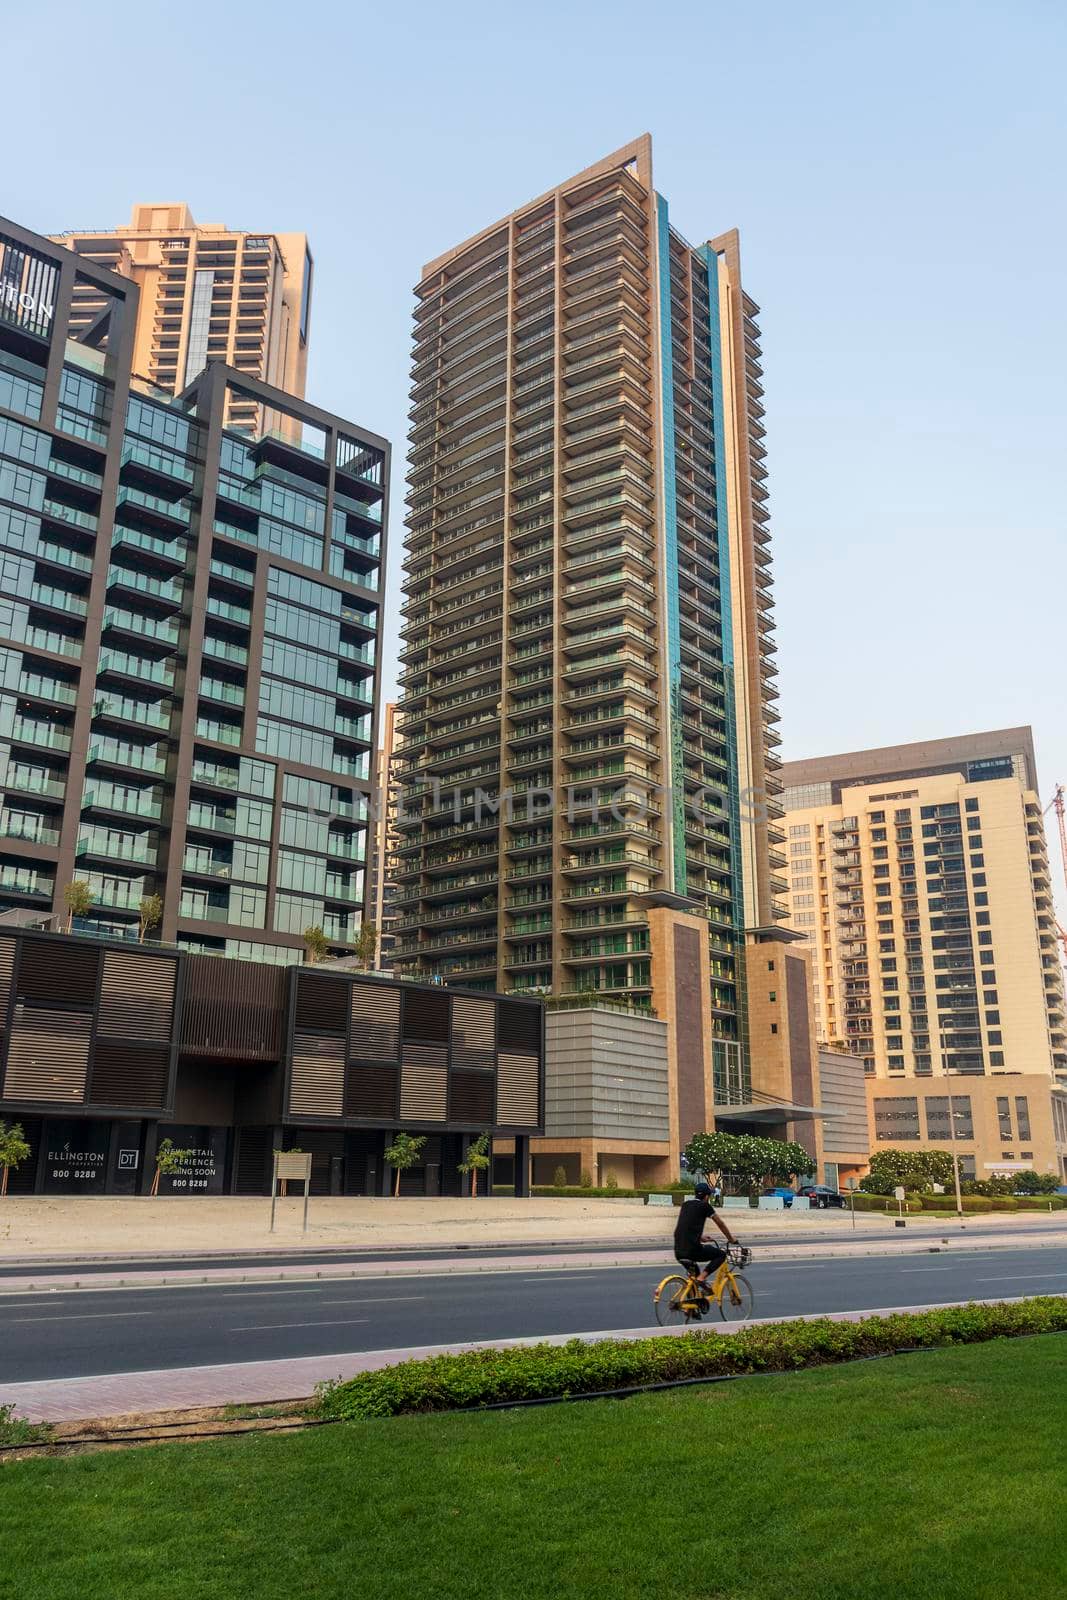 Dubai, UAE - 08.04.2021 - Modern towers Business bay district of Dubai. Urban architecture by pazemin